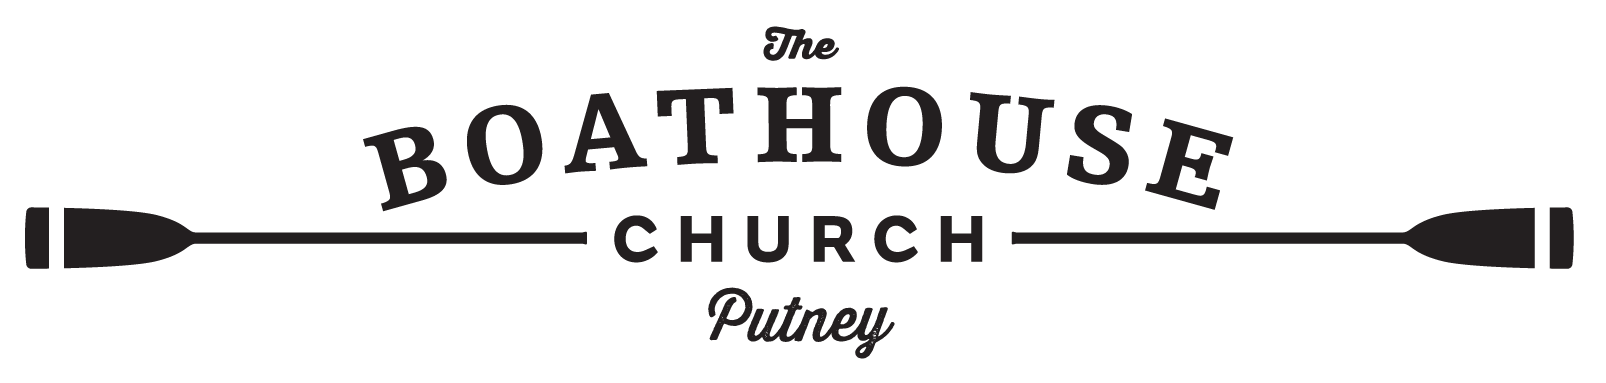 The Boathoue Church